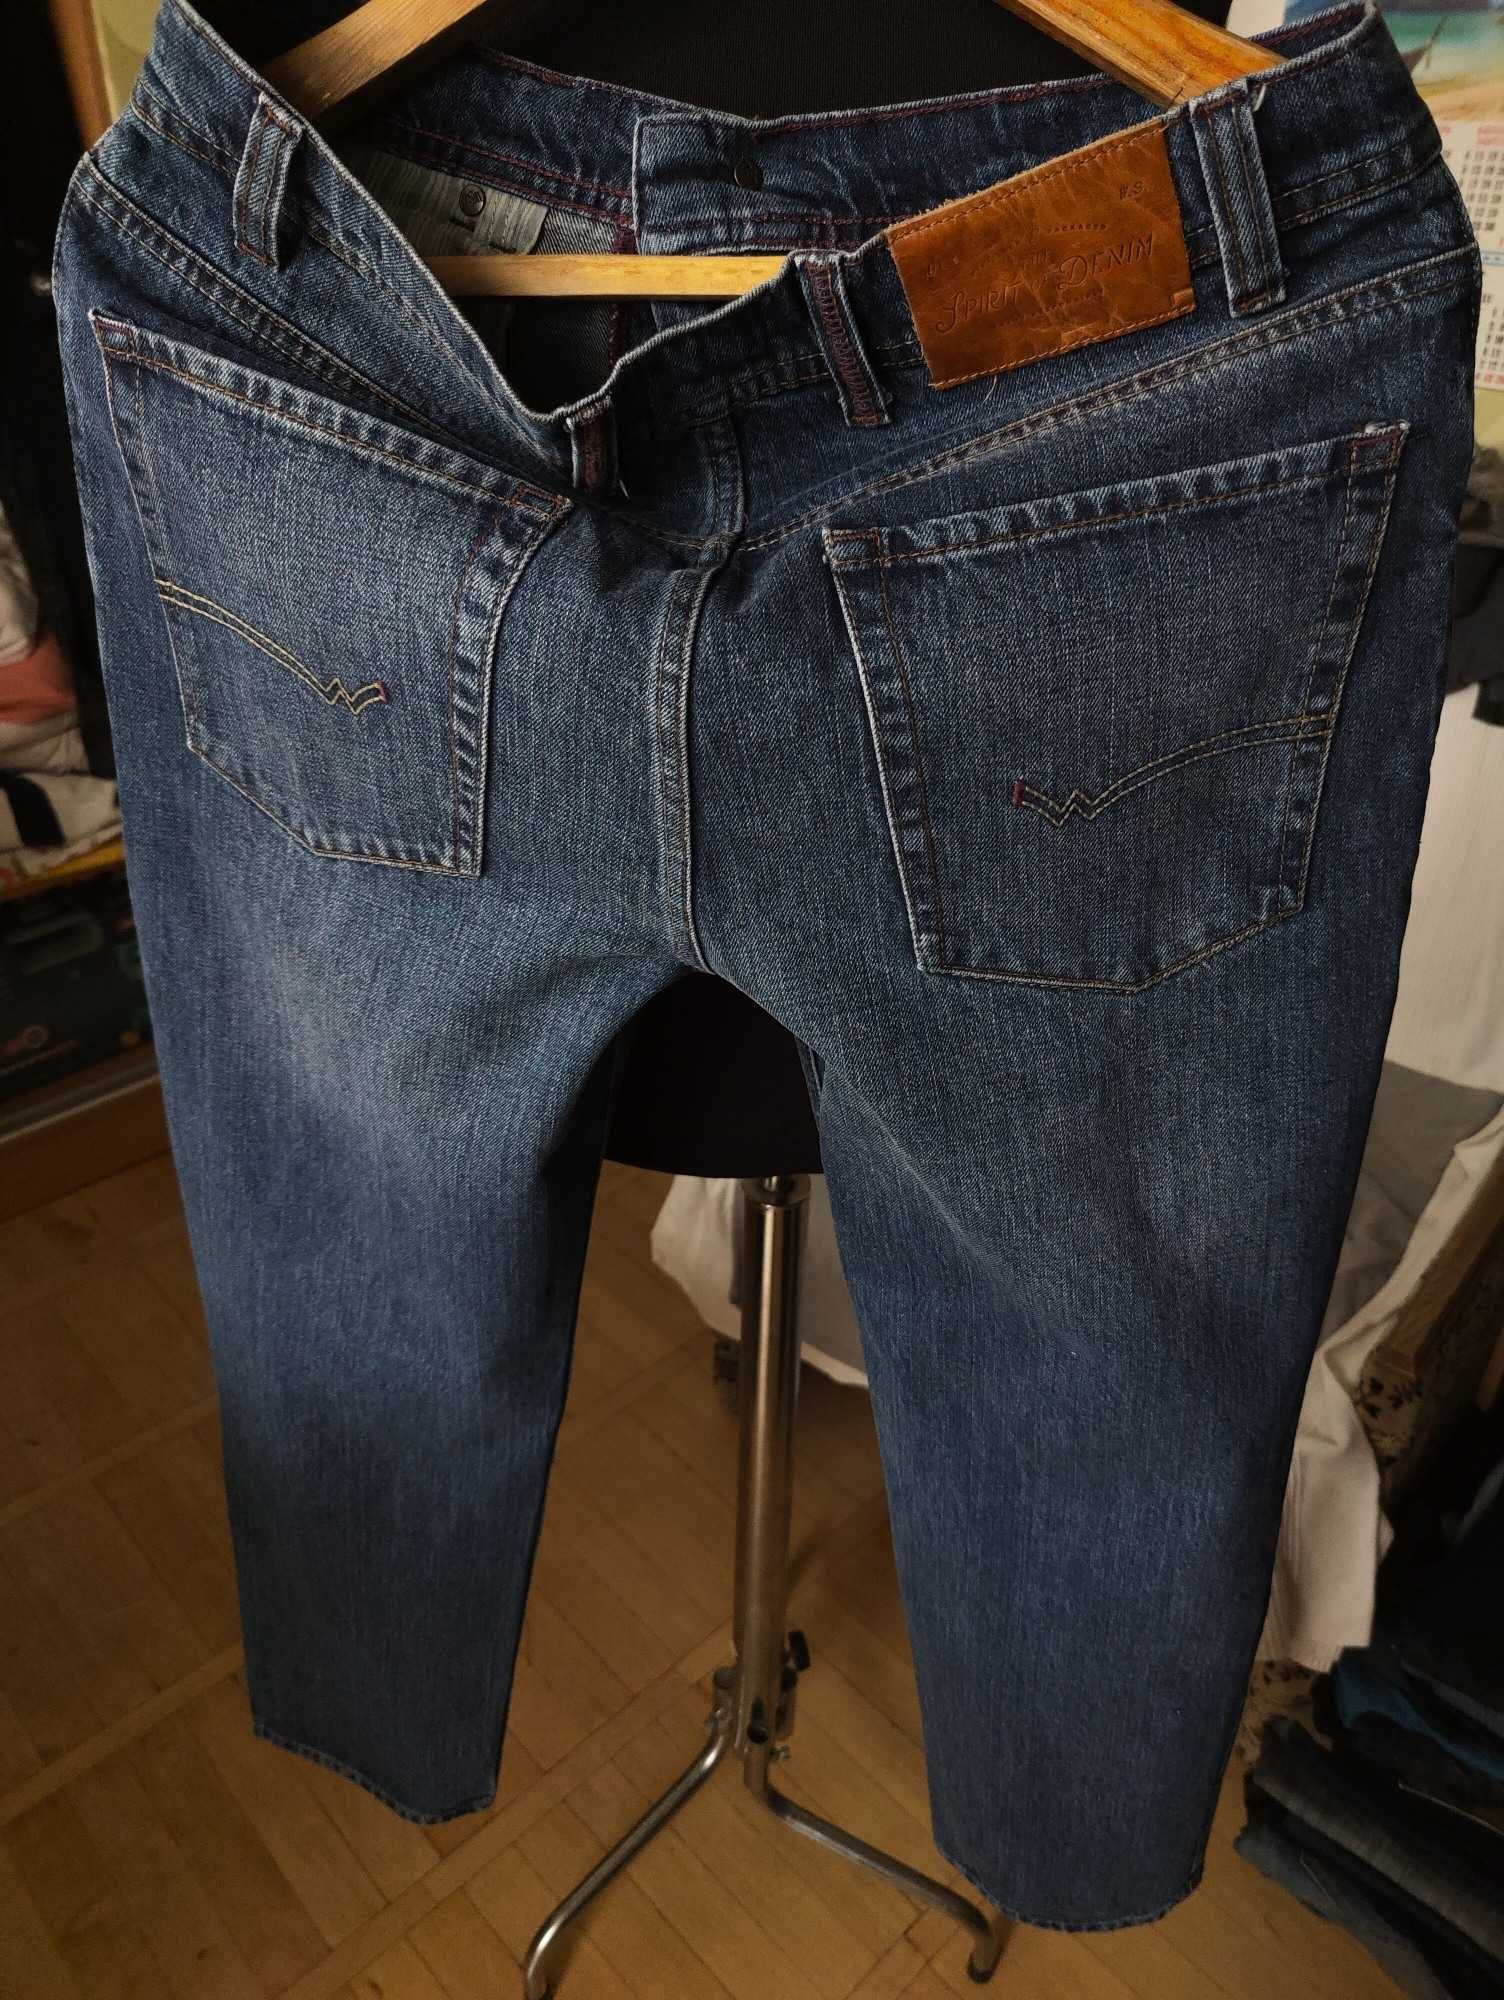 Джинсы White Staff jeans (Англия) w32.